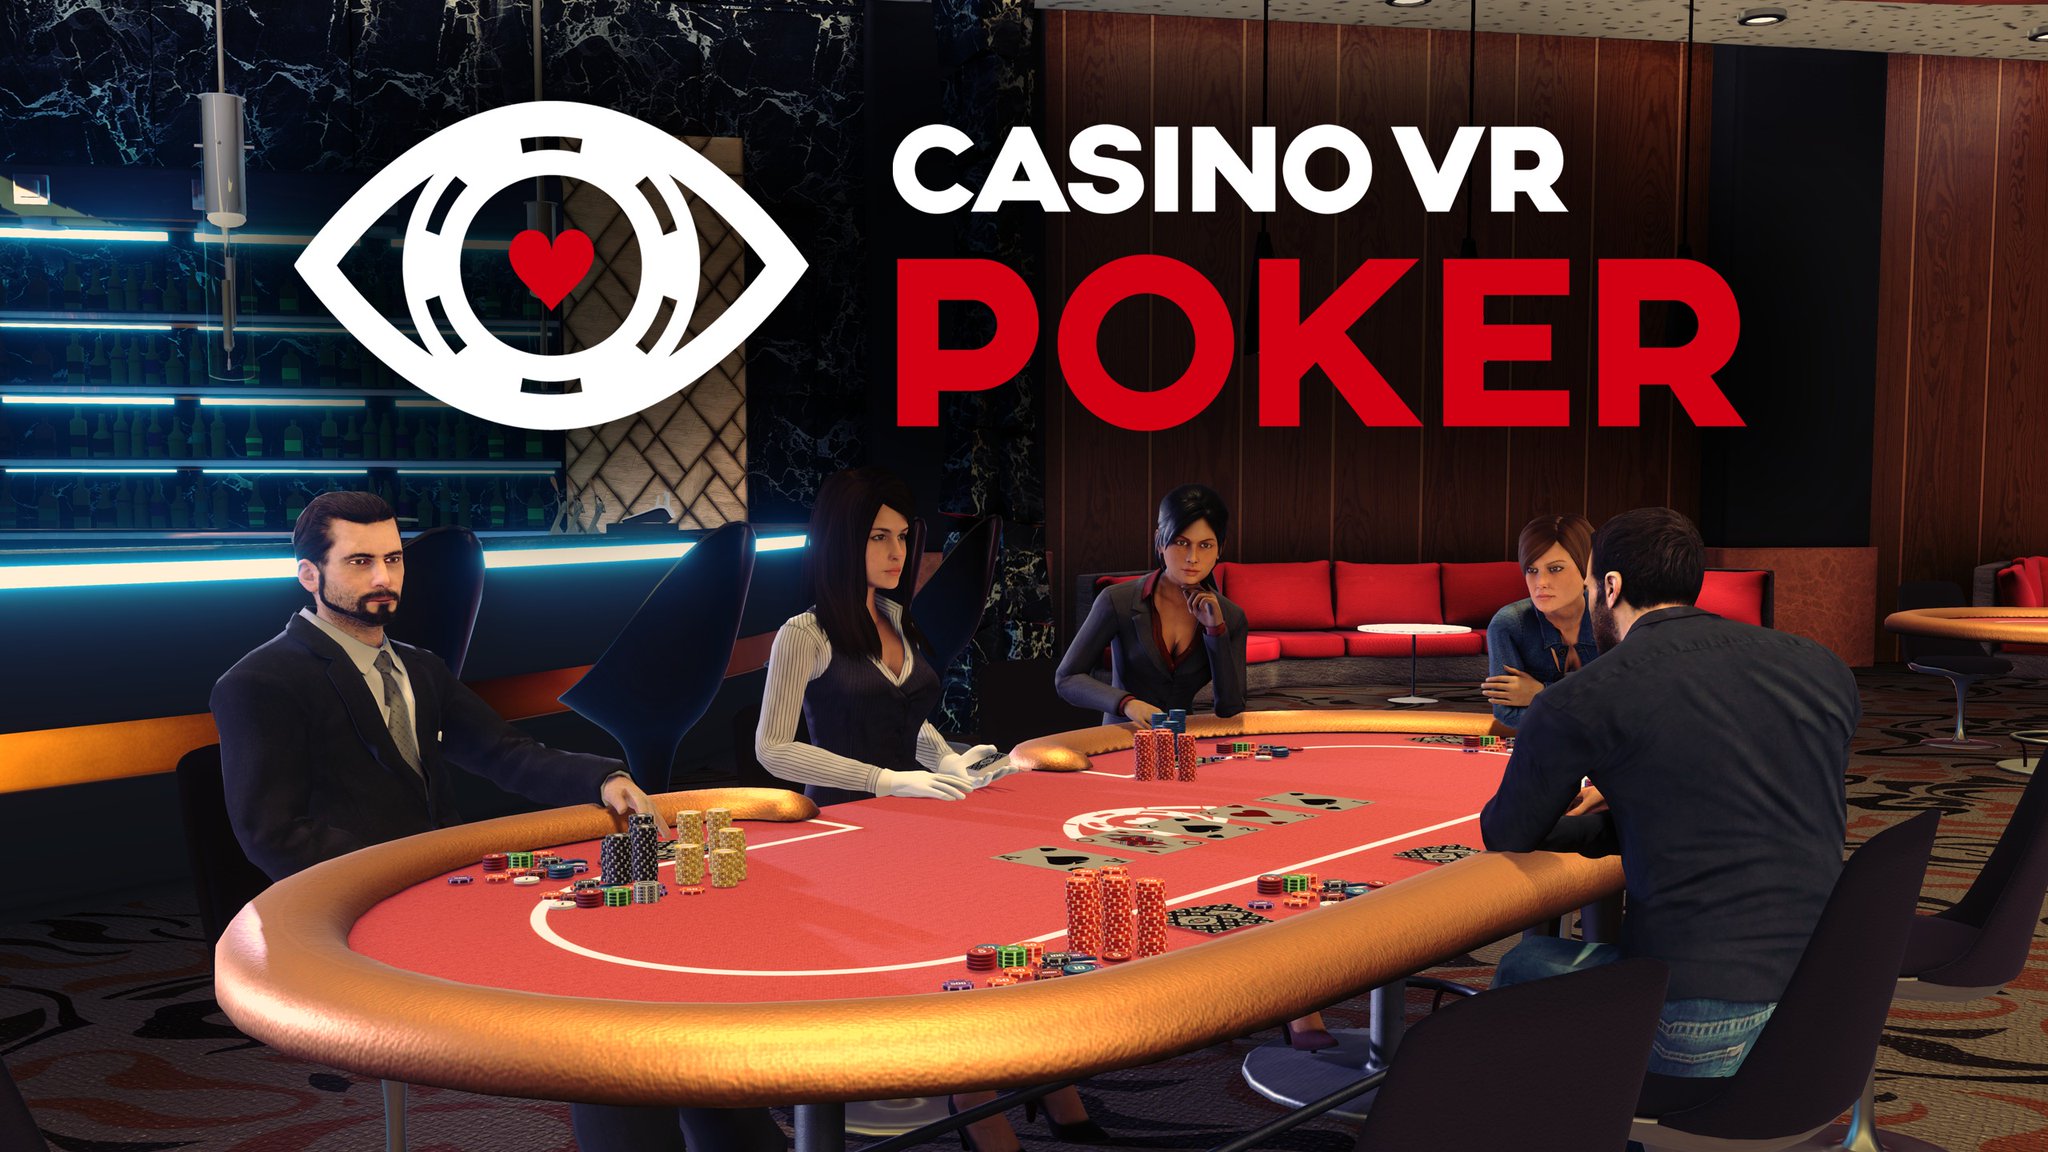 Vr Casino Games For Oculus